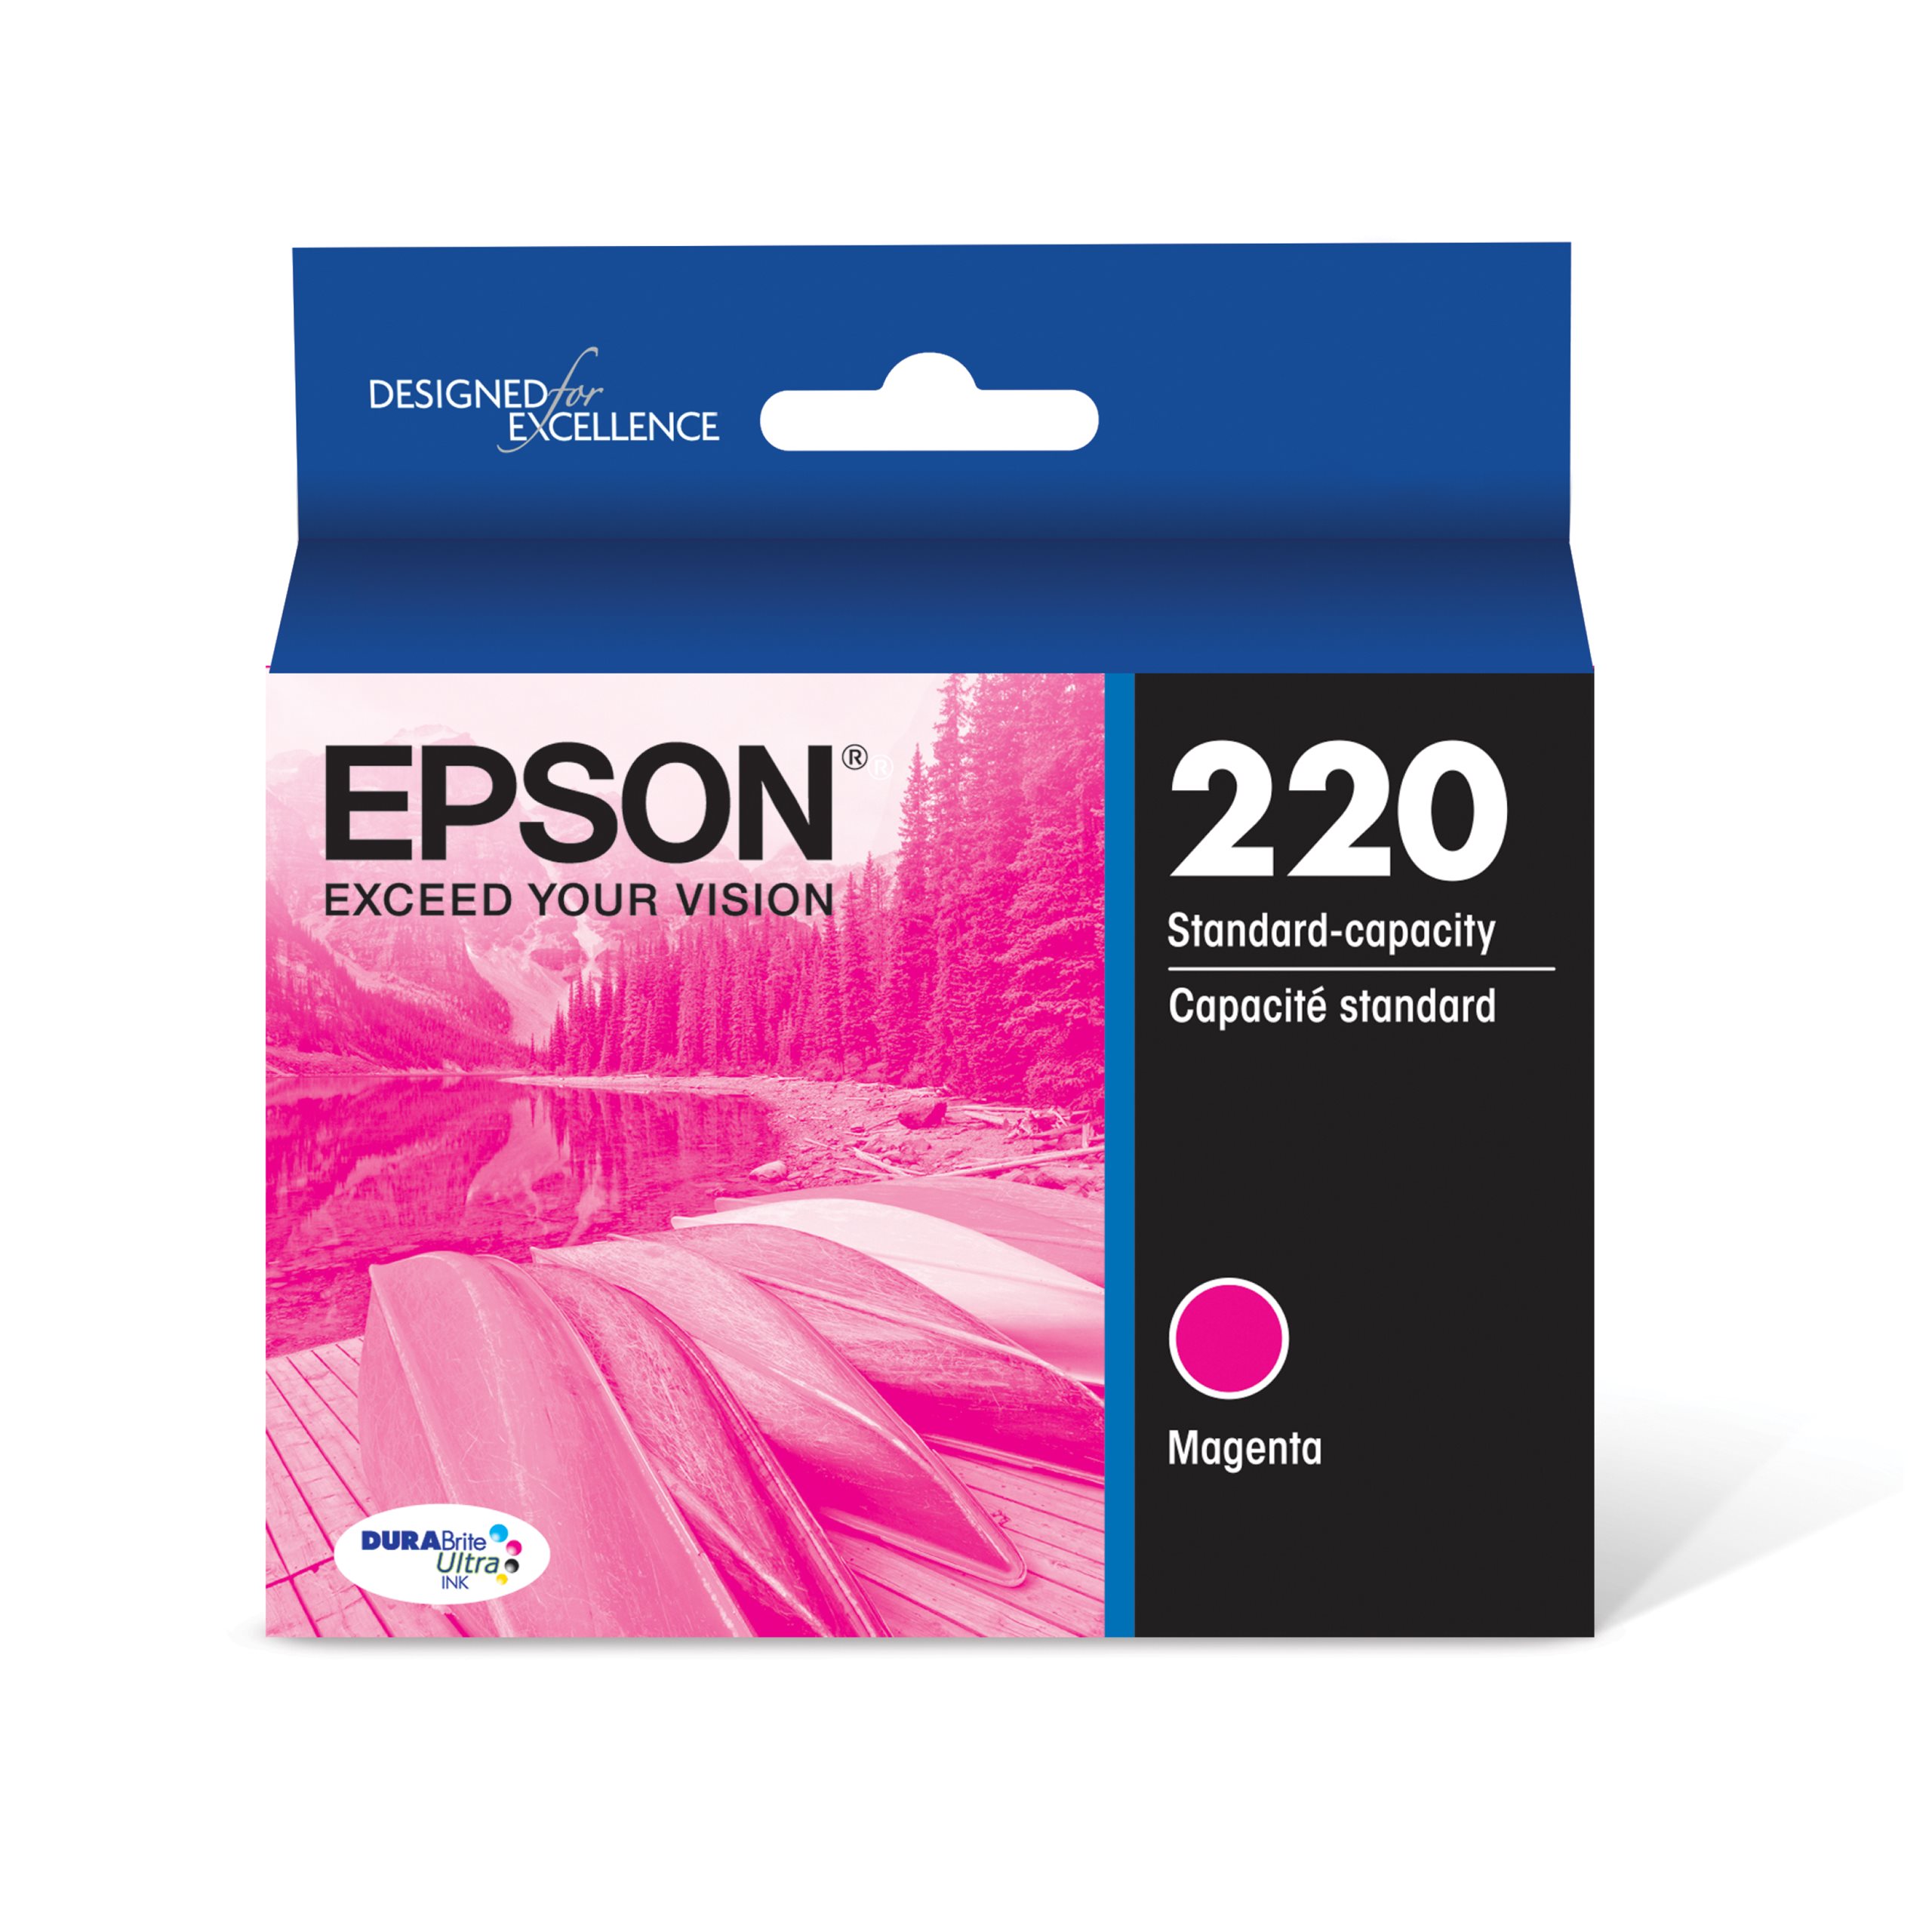 EPSON 220 DURABrite Ultra Ink Standard Capacity Magenta Cartridge